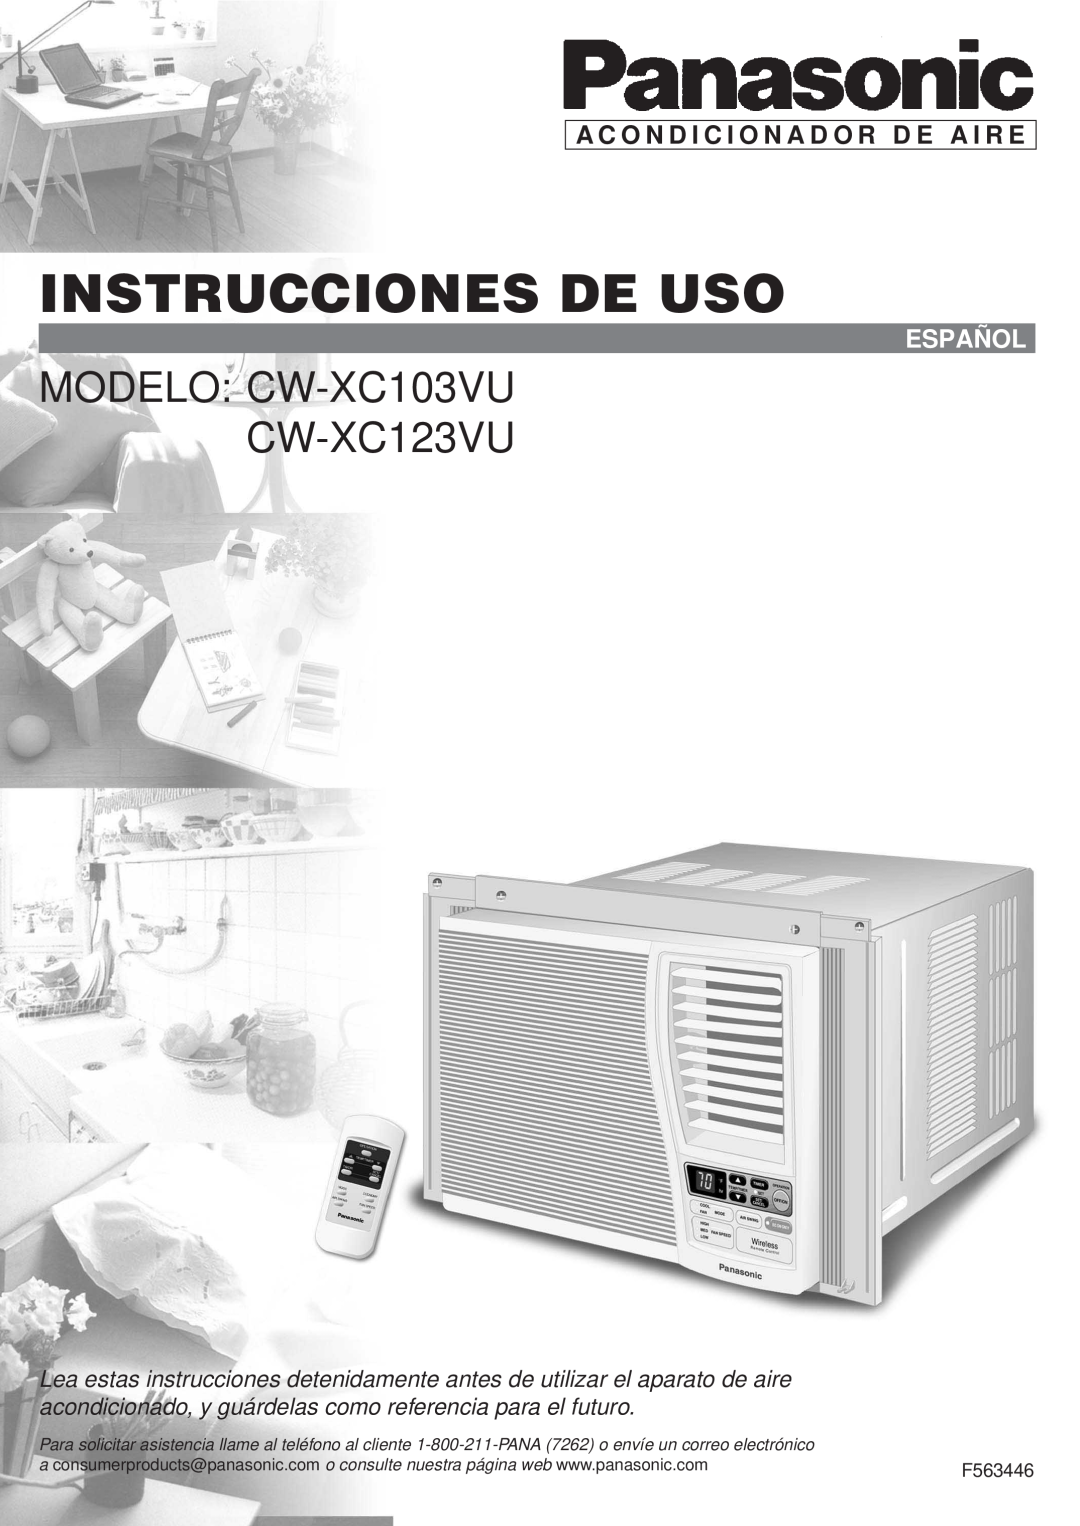 Panasonic manual Instrucciones De Uso, MODELO CW-XC103VU CW-XC123VU, A C O N D I C I O N A D O R D E A I R E, Español 